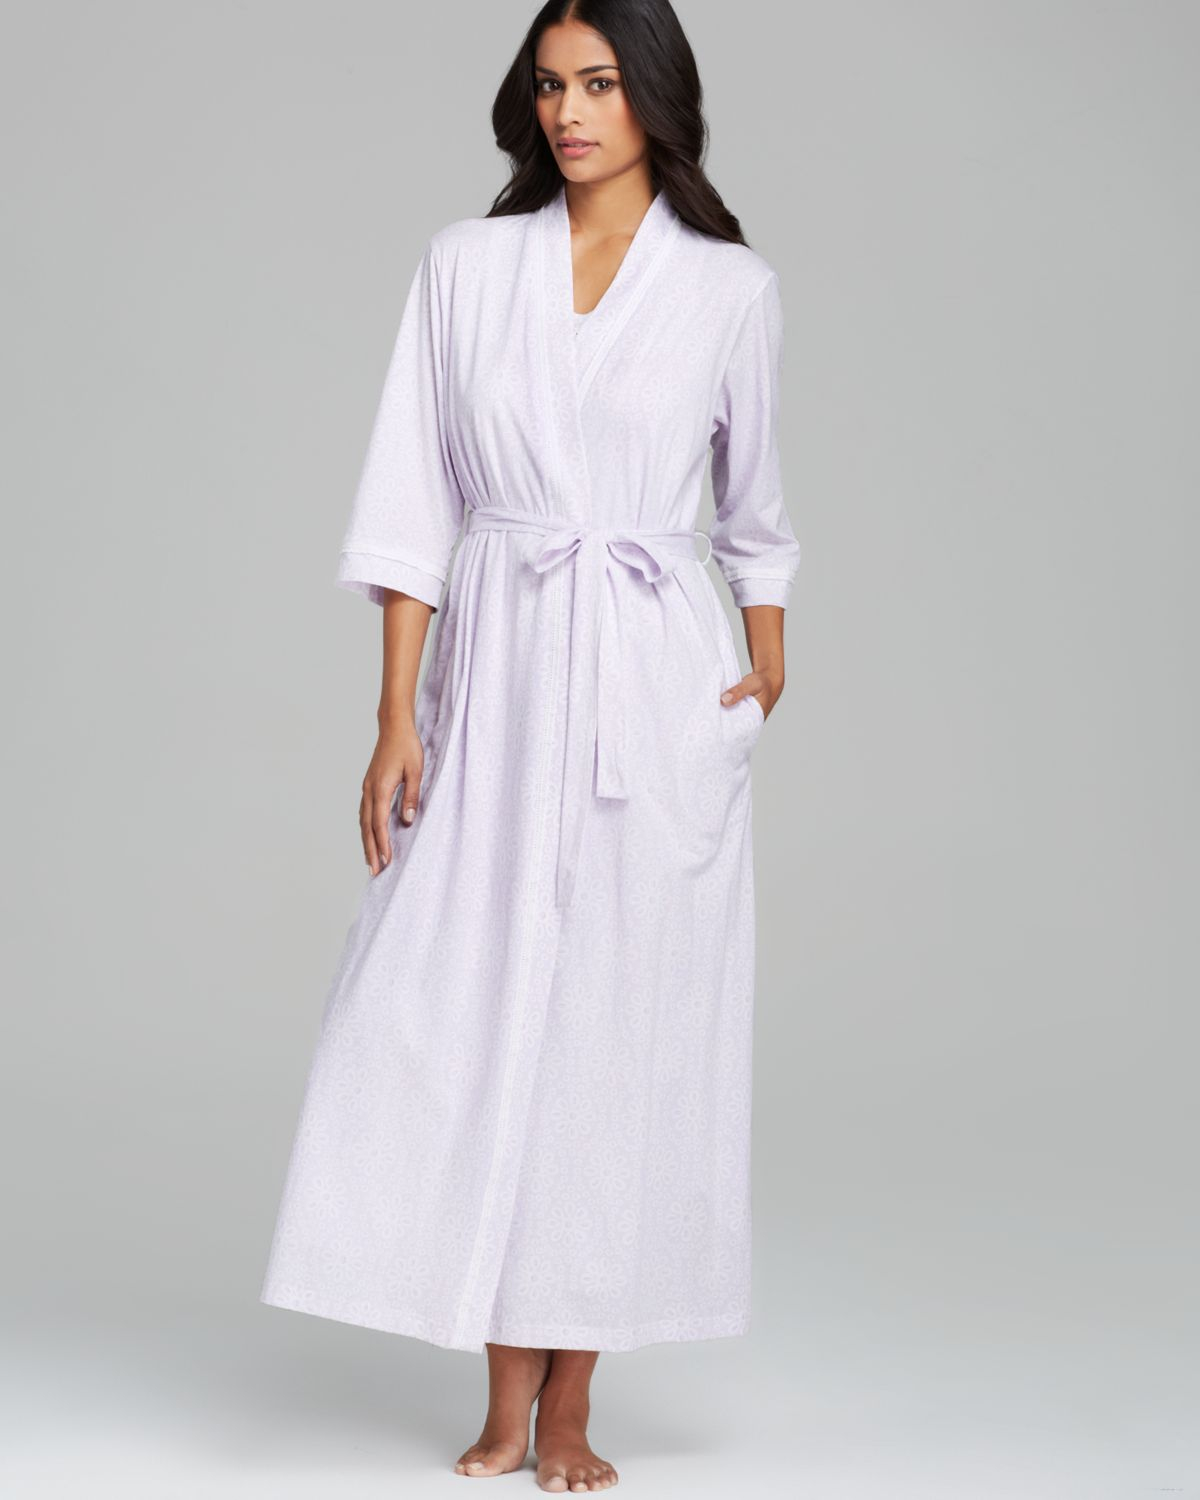 Carole Hochman Eyelet Floral Cotton Jersey Long Robe in White | Lyst